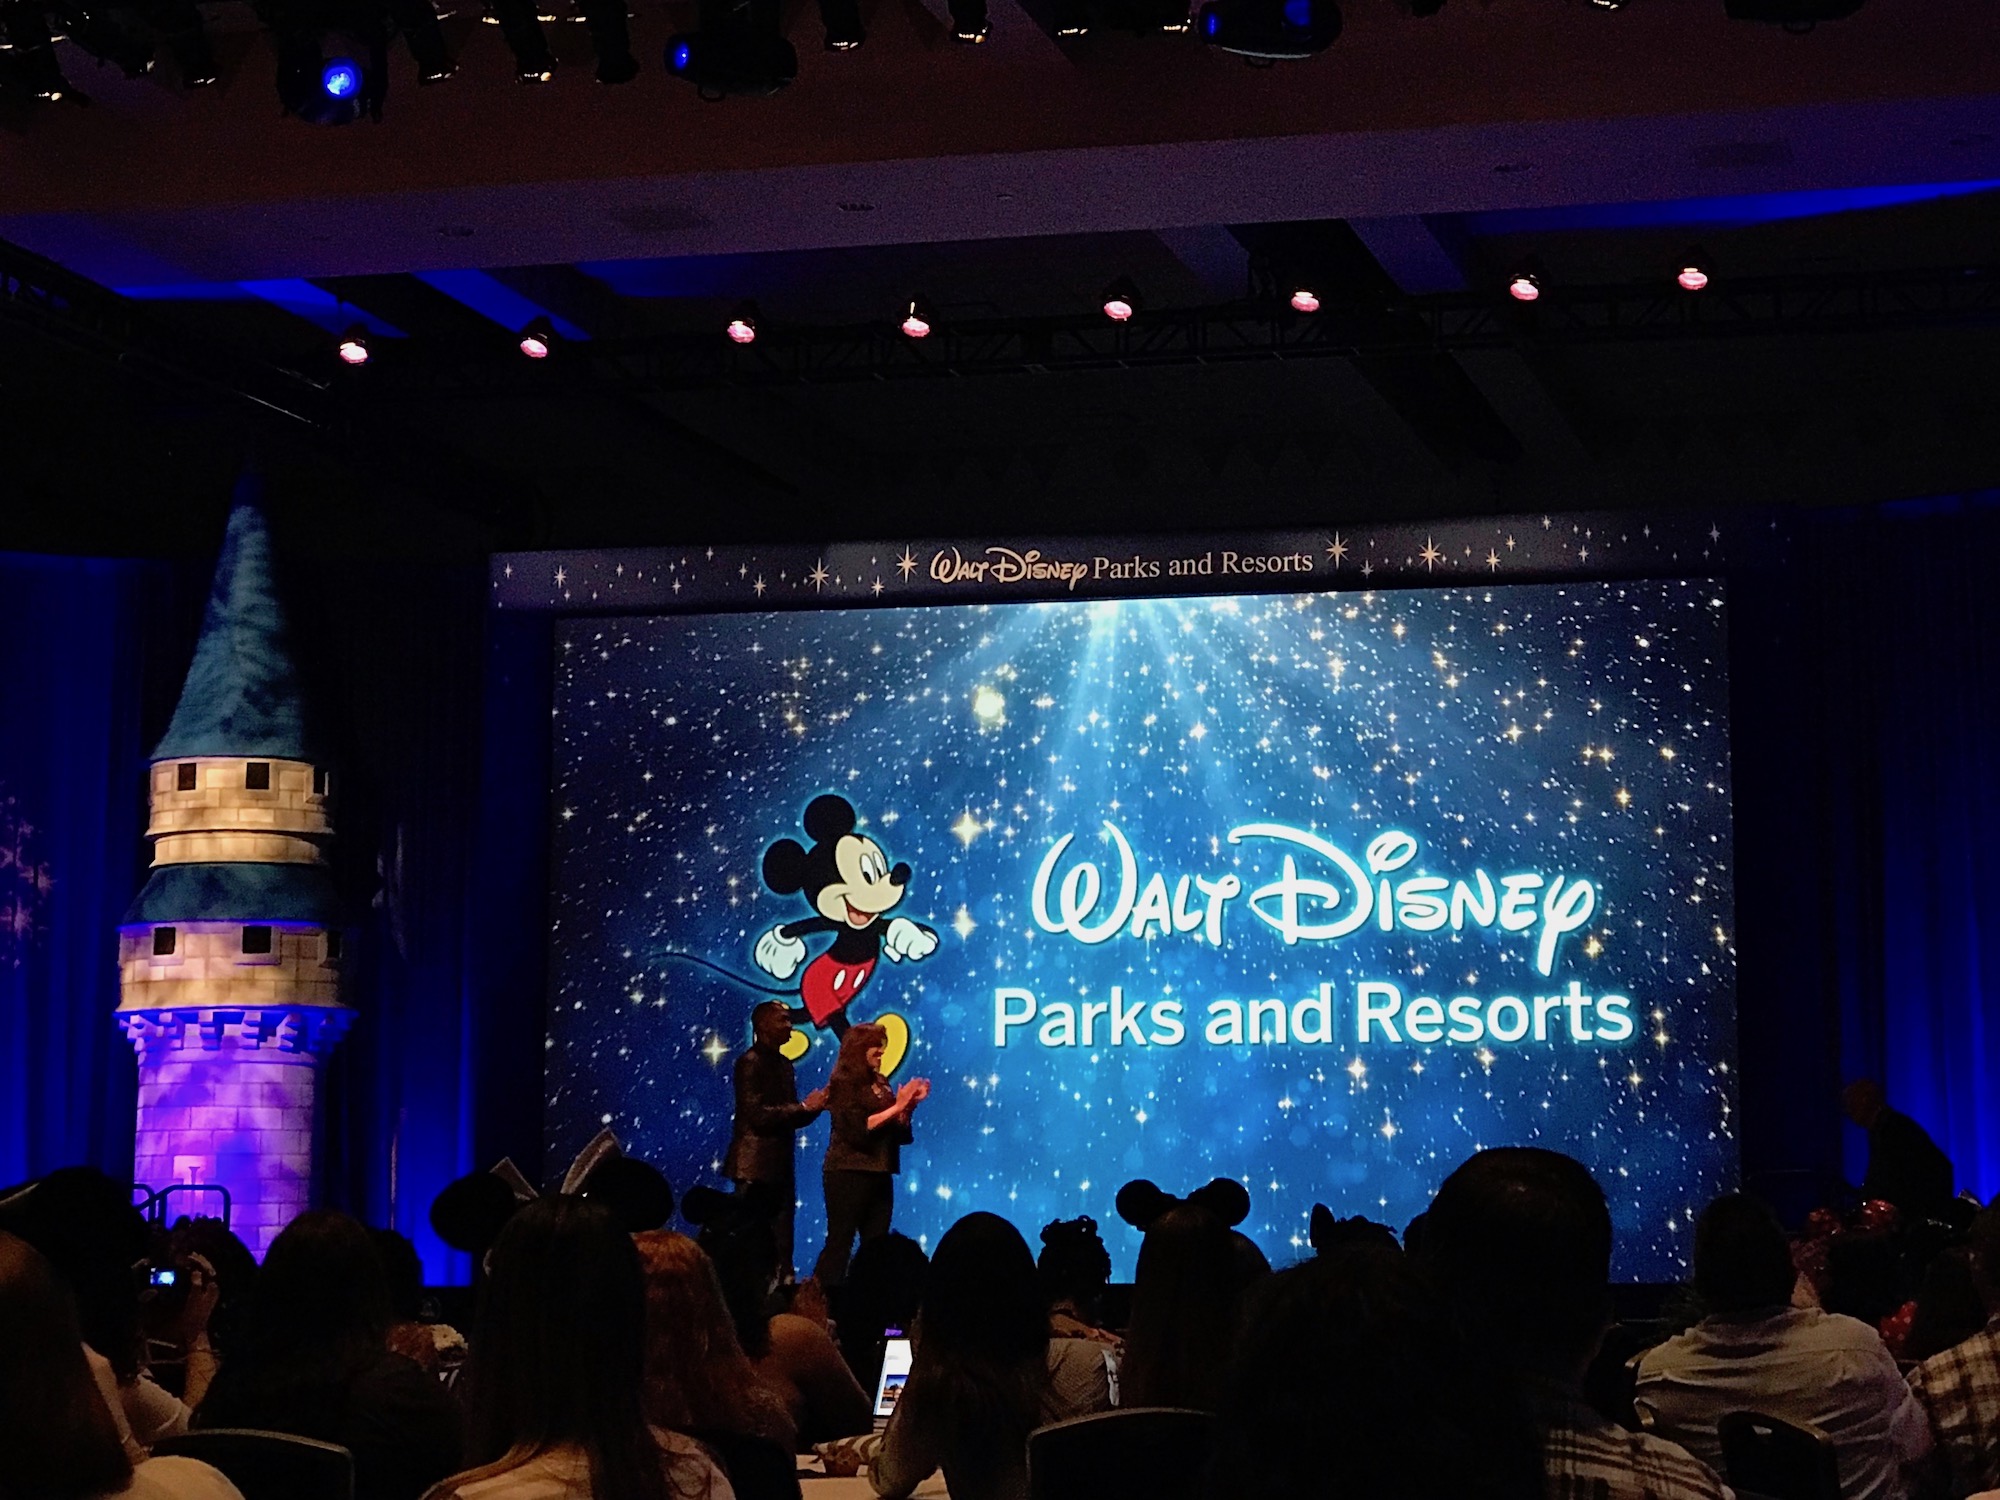 Disney Social Media Moms Conference 2018